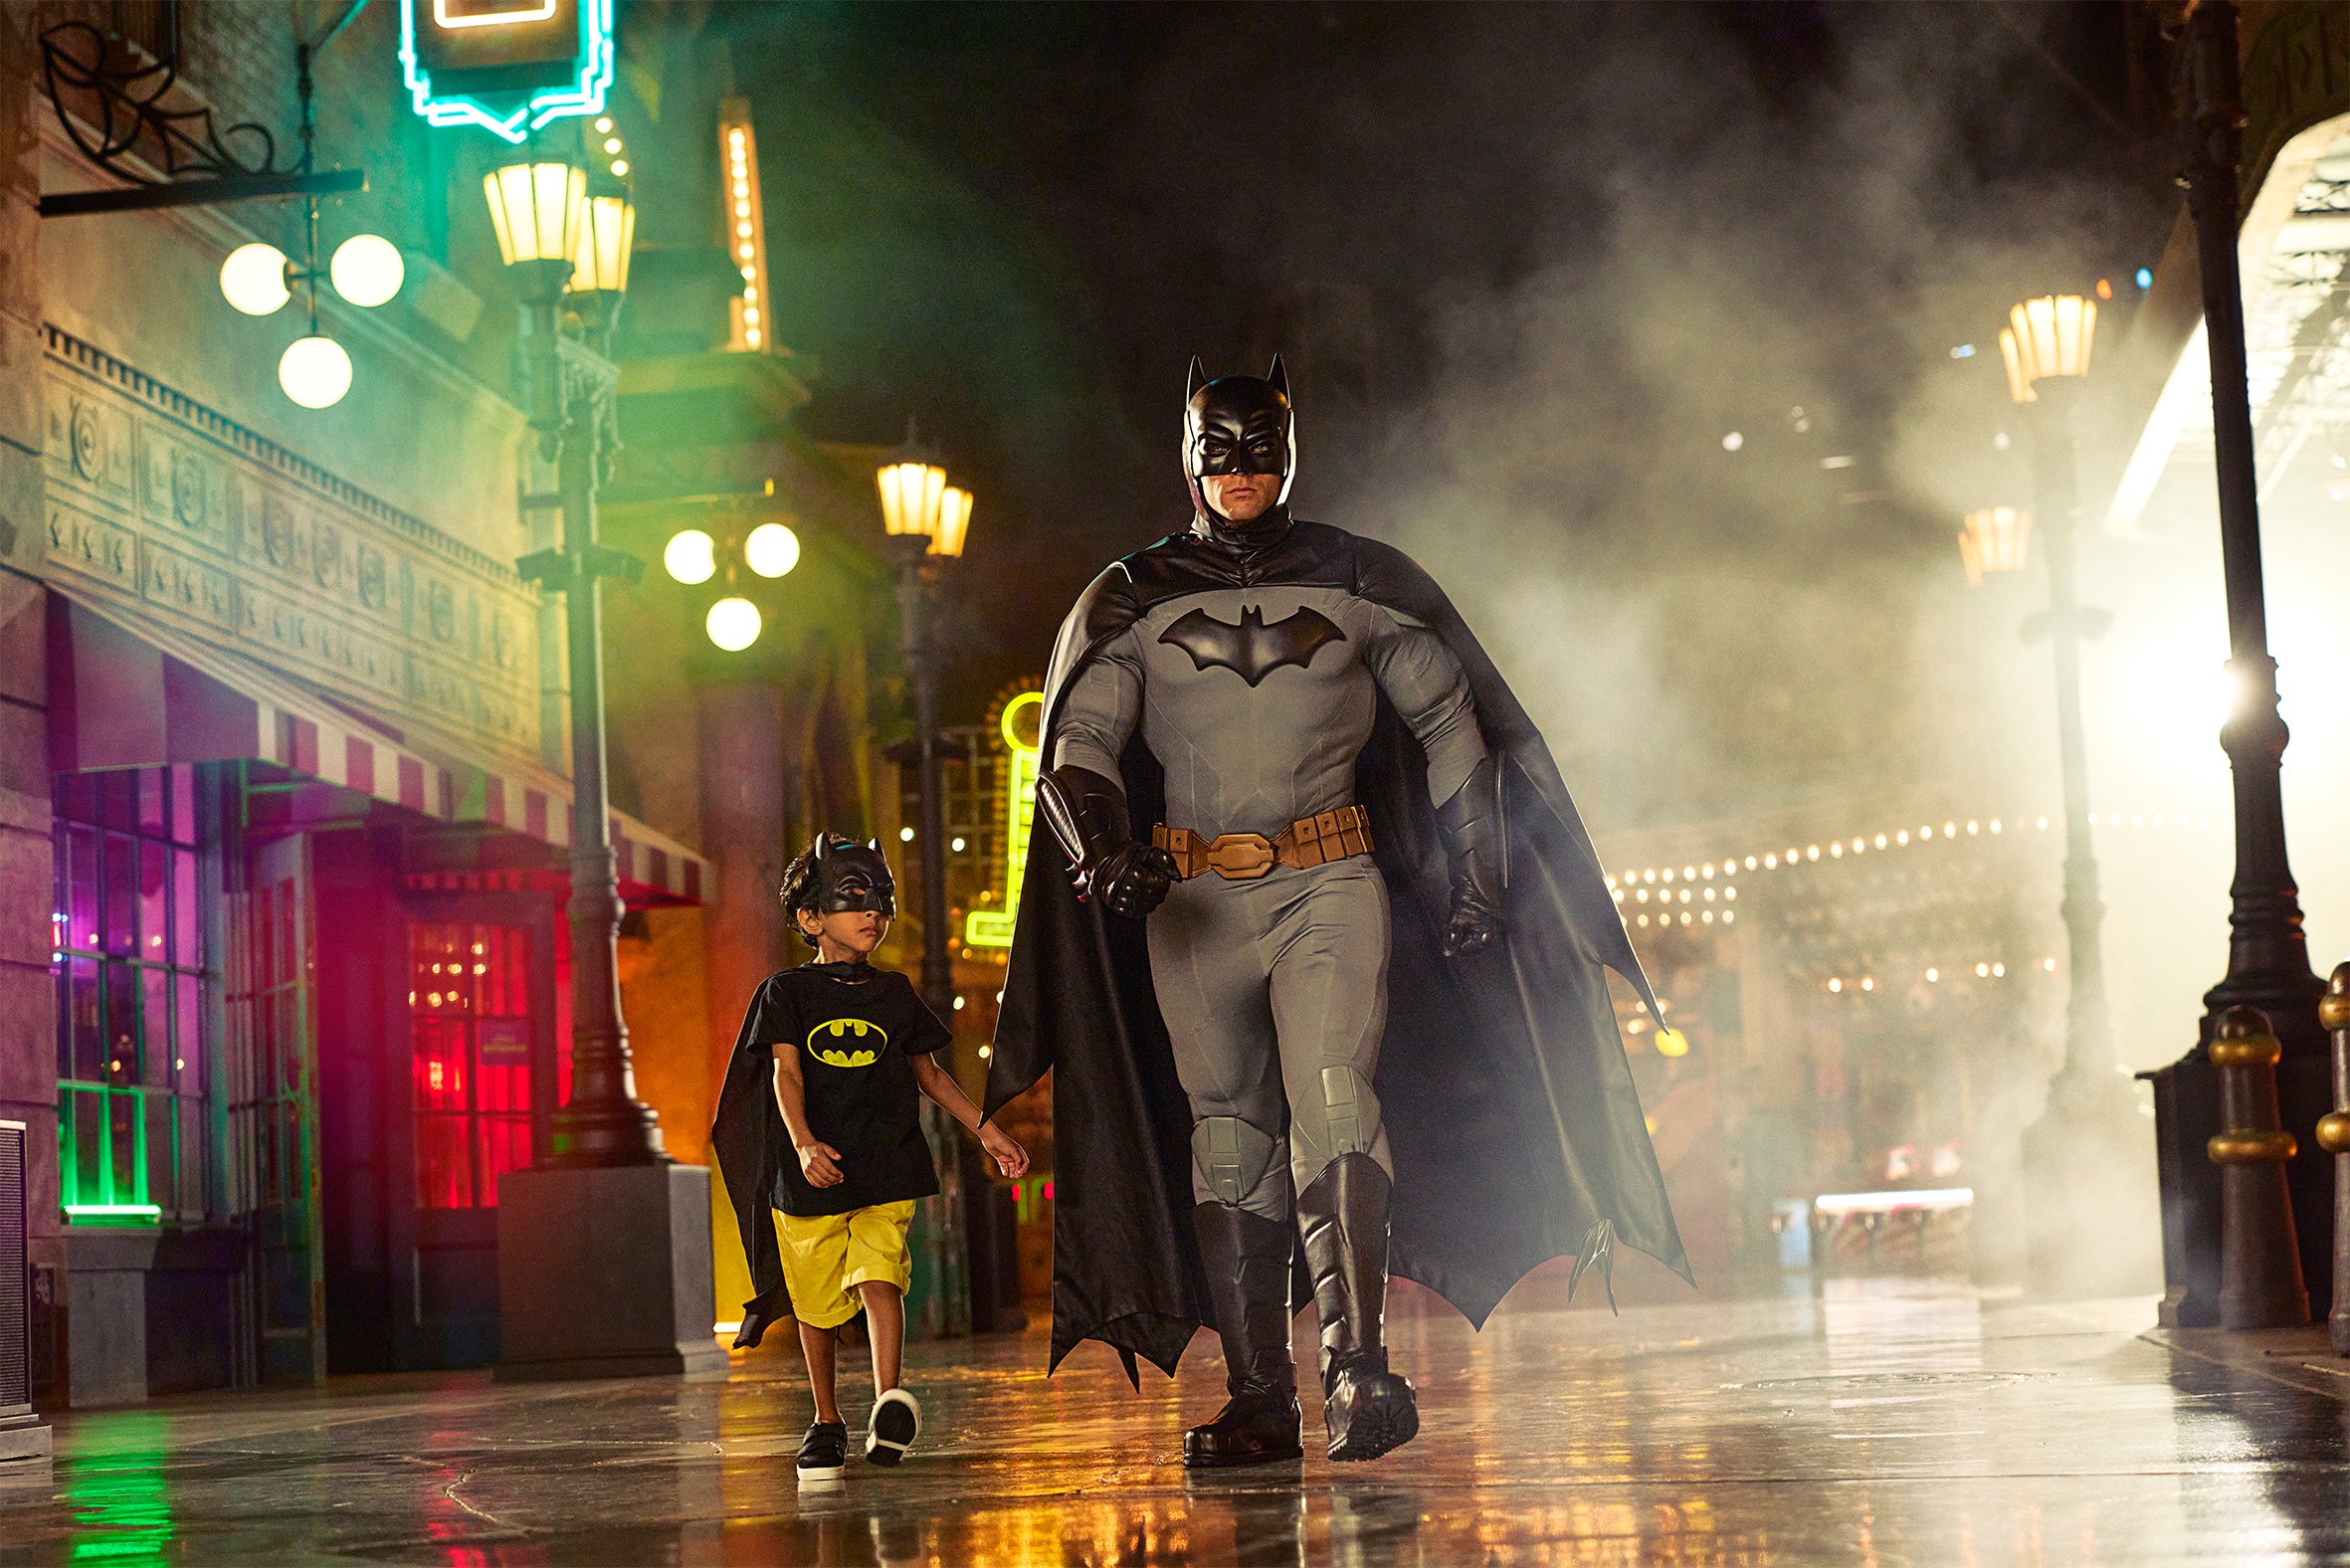 Batman and a little boy dressed as Batman in the Warner Bros World theme park